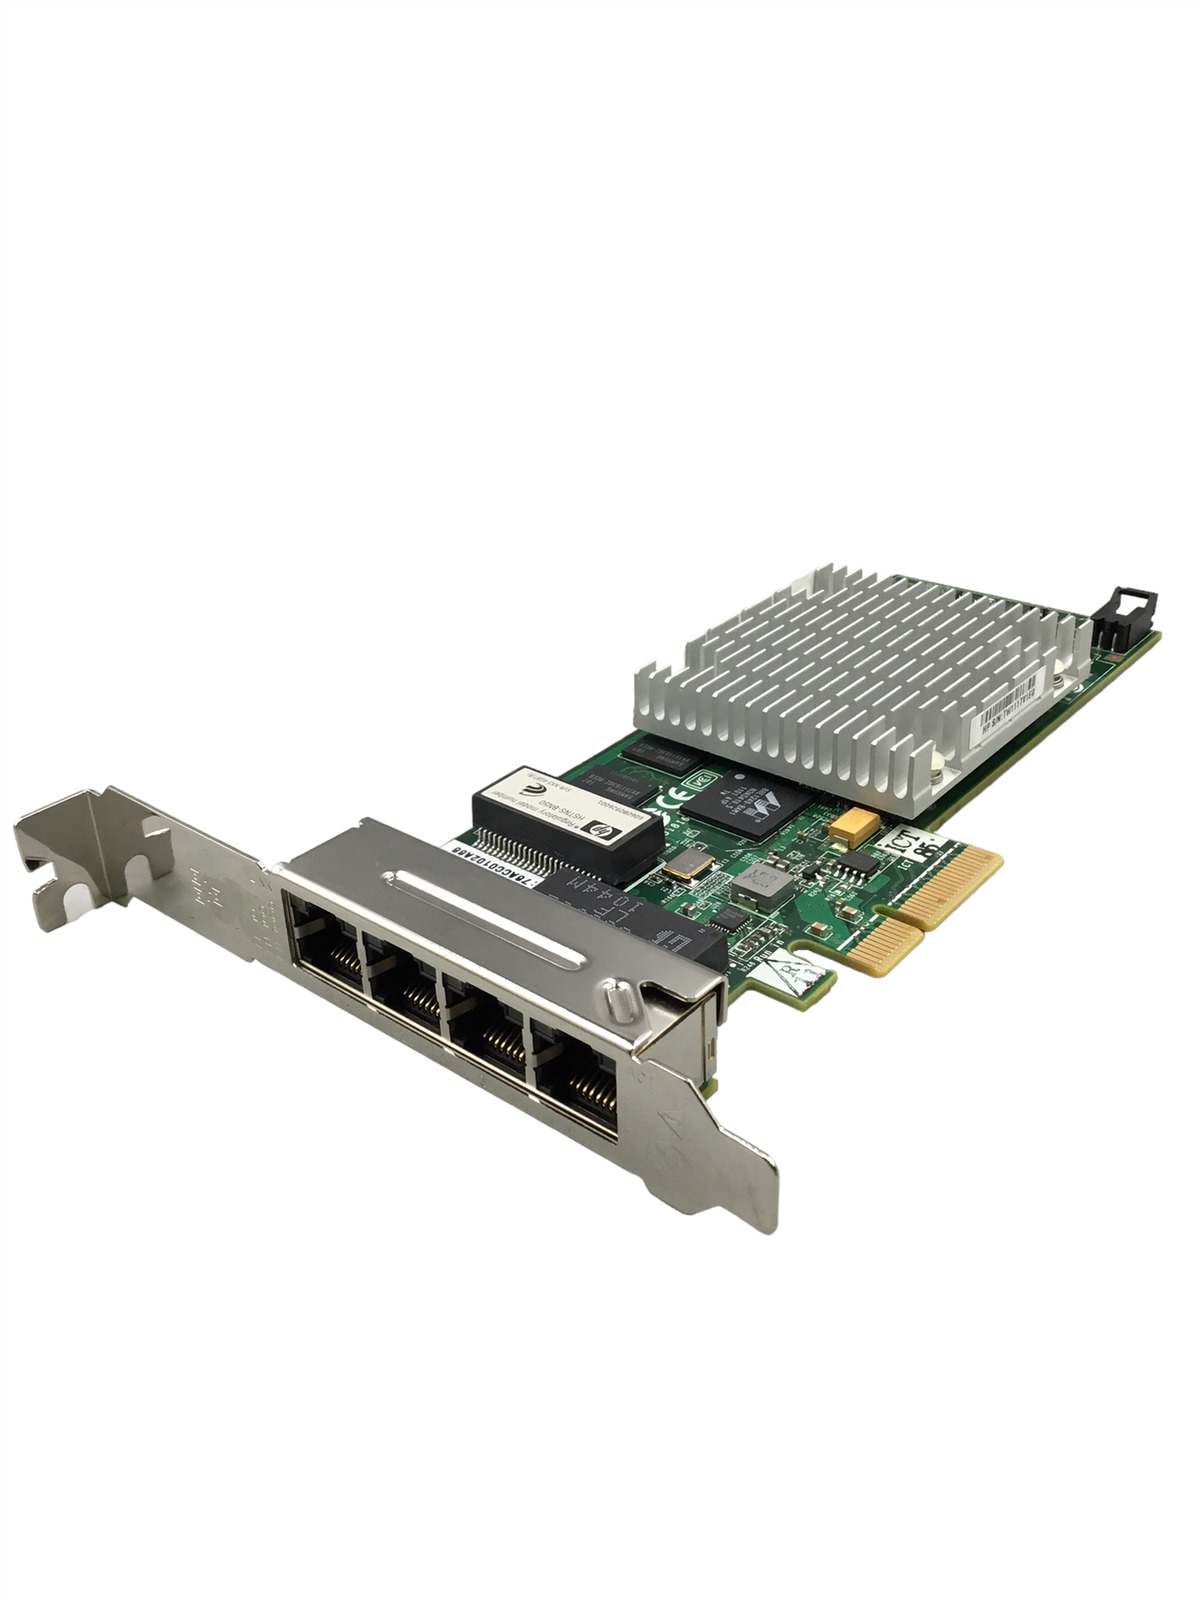 HP NC375T 1GB Quad Port Gigabit Ethernet Server Adapter PCIe 491176-001